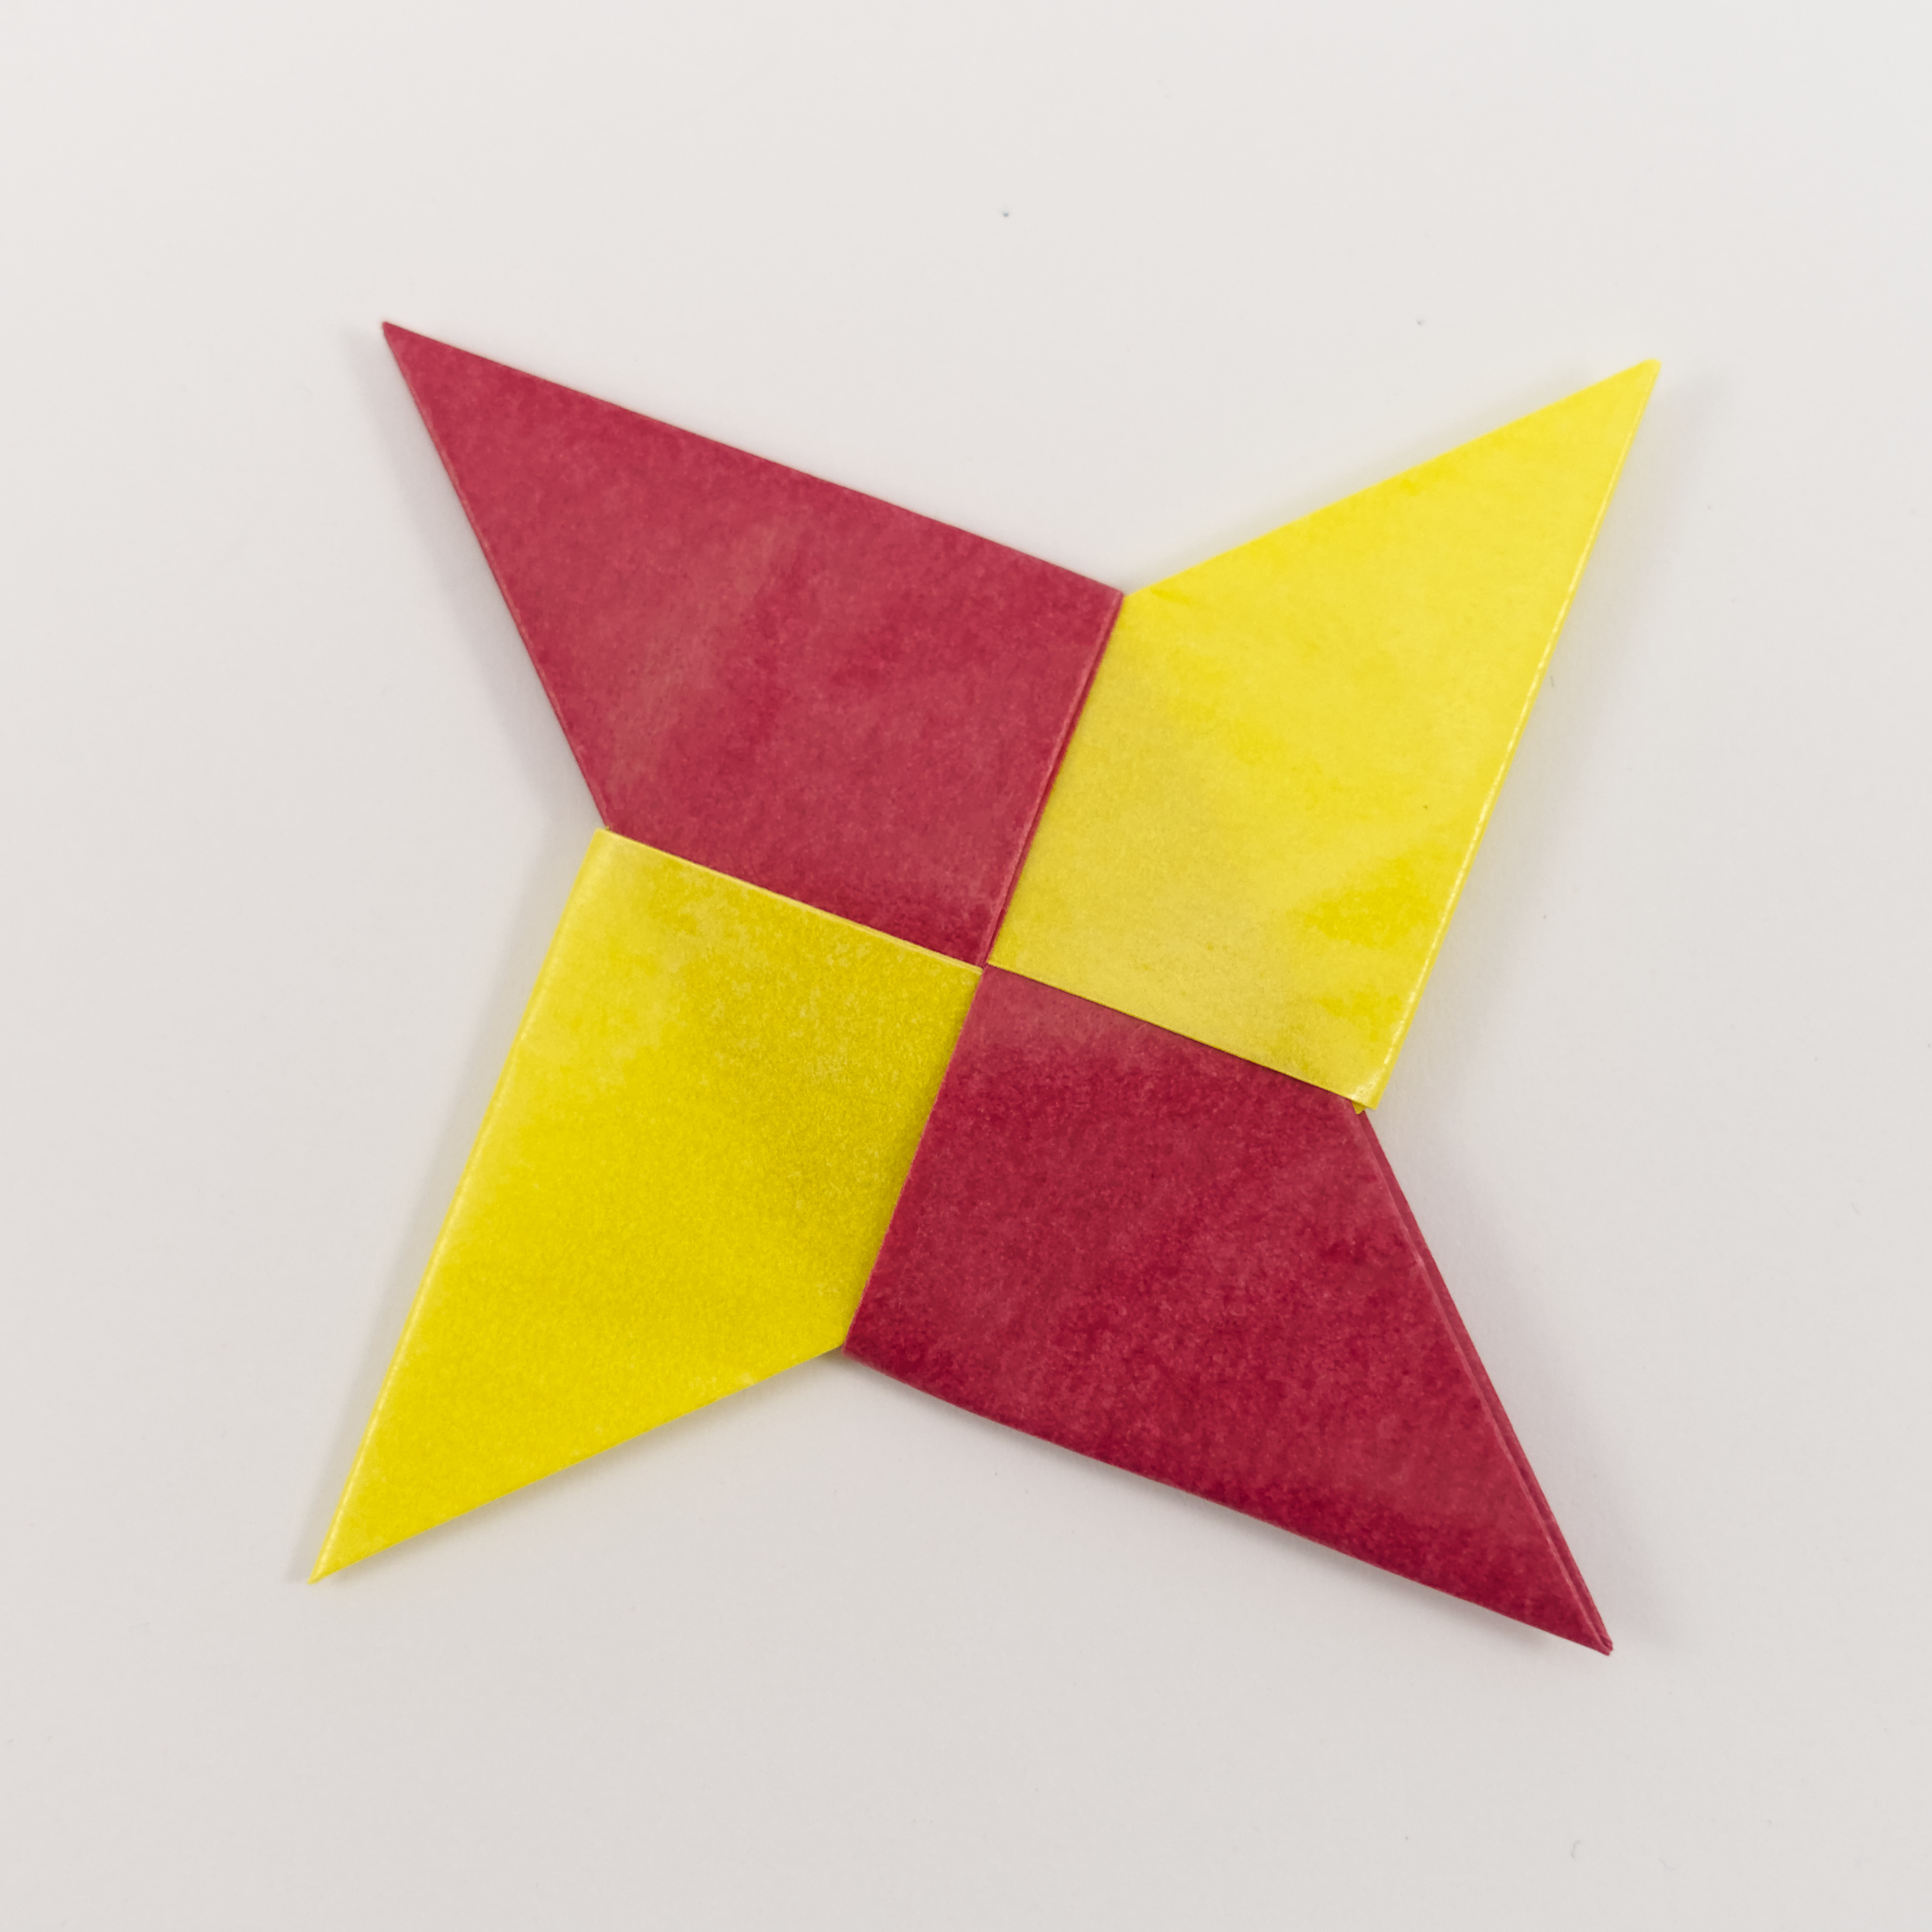 https://origami.kosmulski.org/img/models/n/ninja-star-traditional.jpg